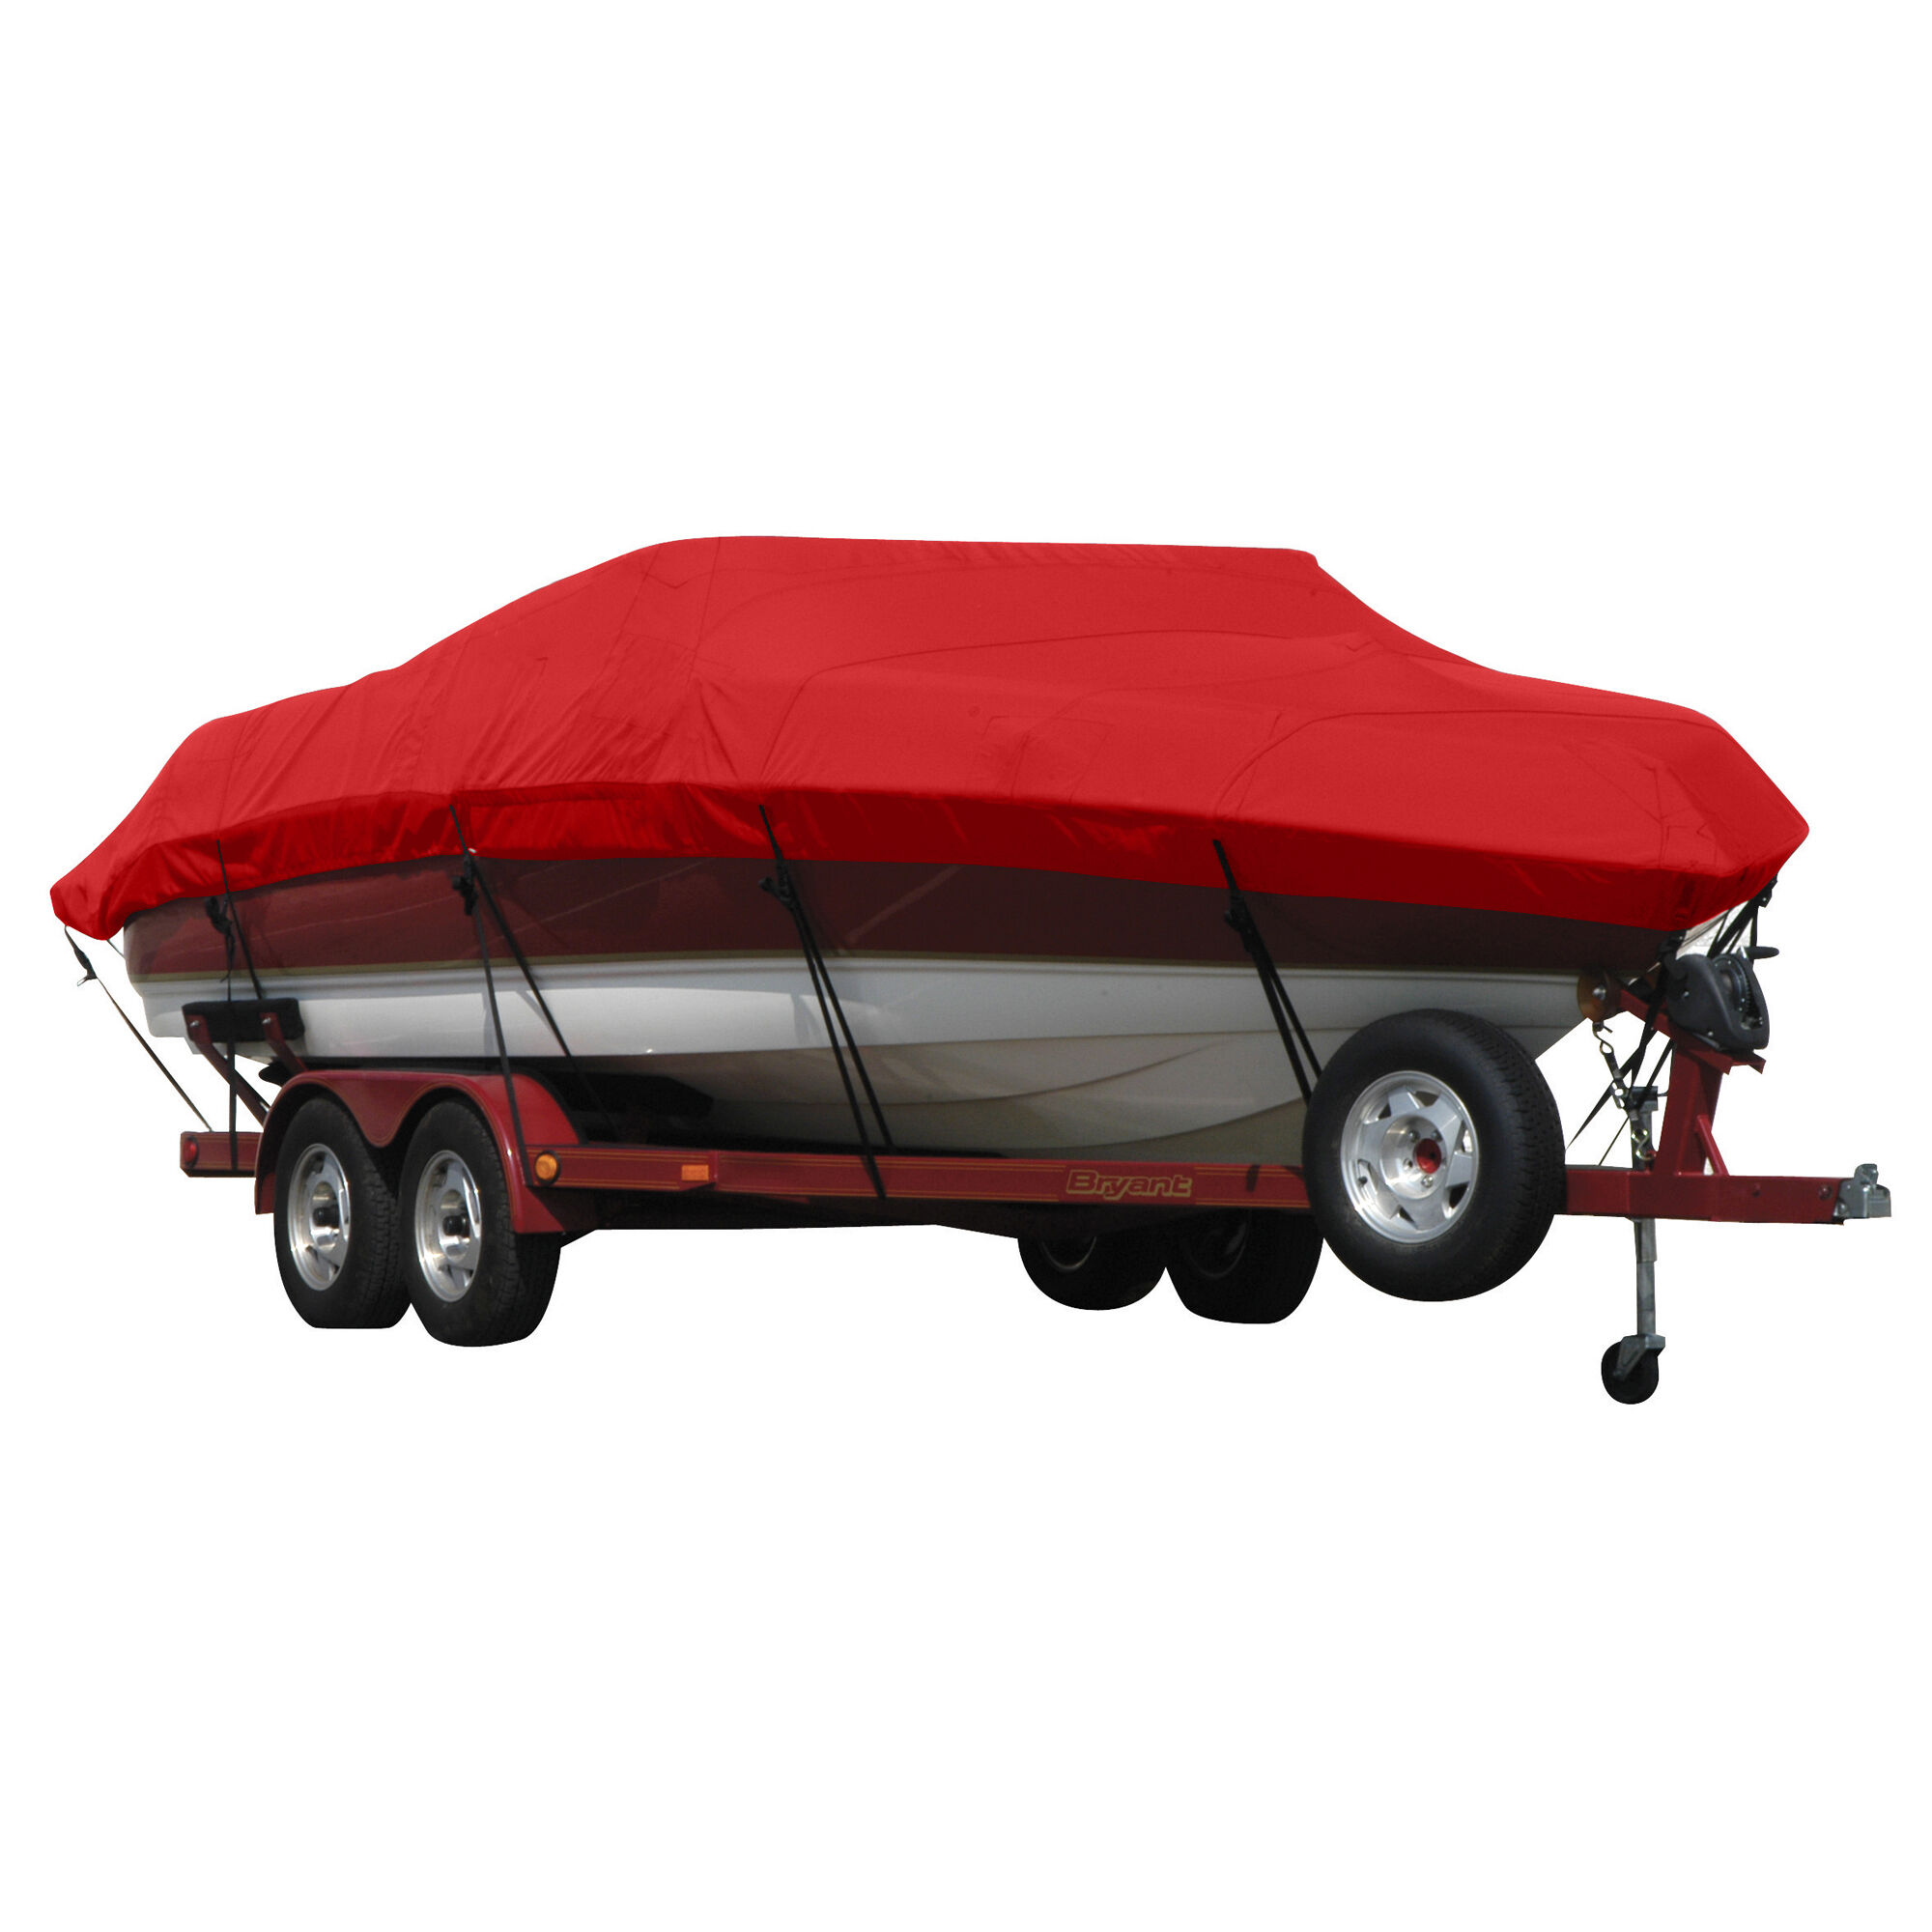 Covermate Exact Fit Sunbrella Boat Cover for Bayliner Capri 1401 Cj/Ls Capri 1401 Cj/Ls Bowrider O/B. Jockey Red Acrylic